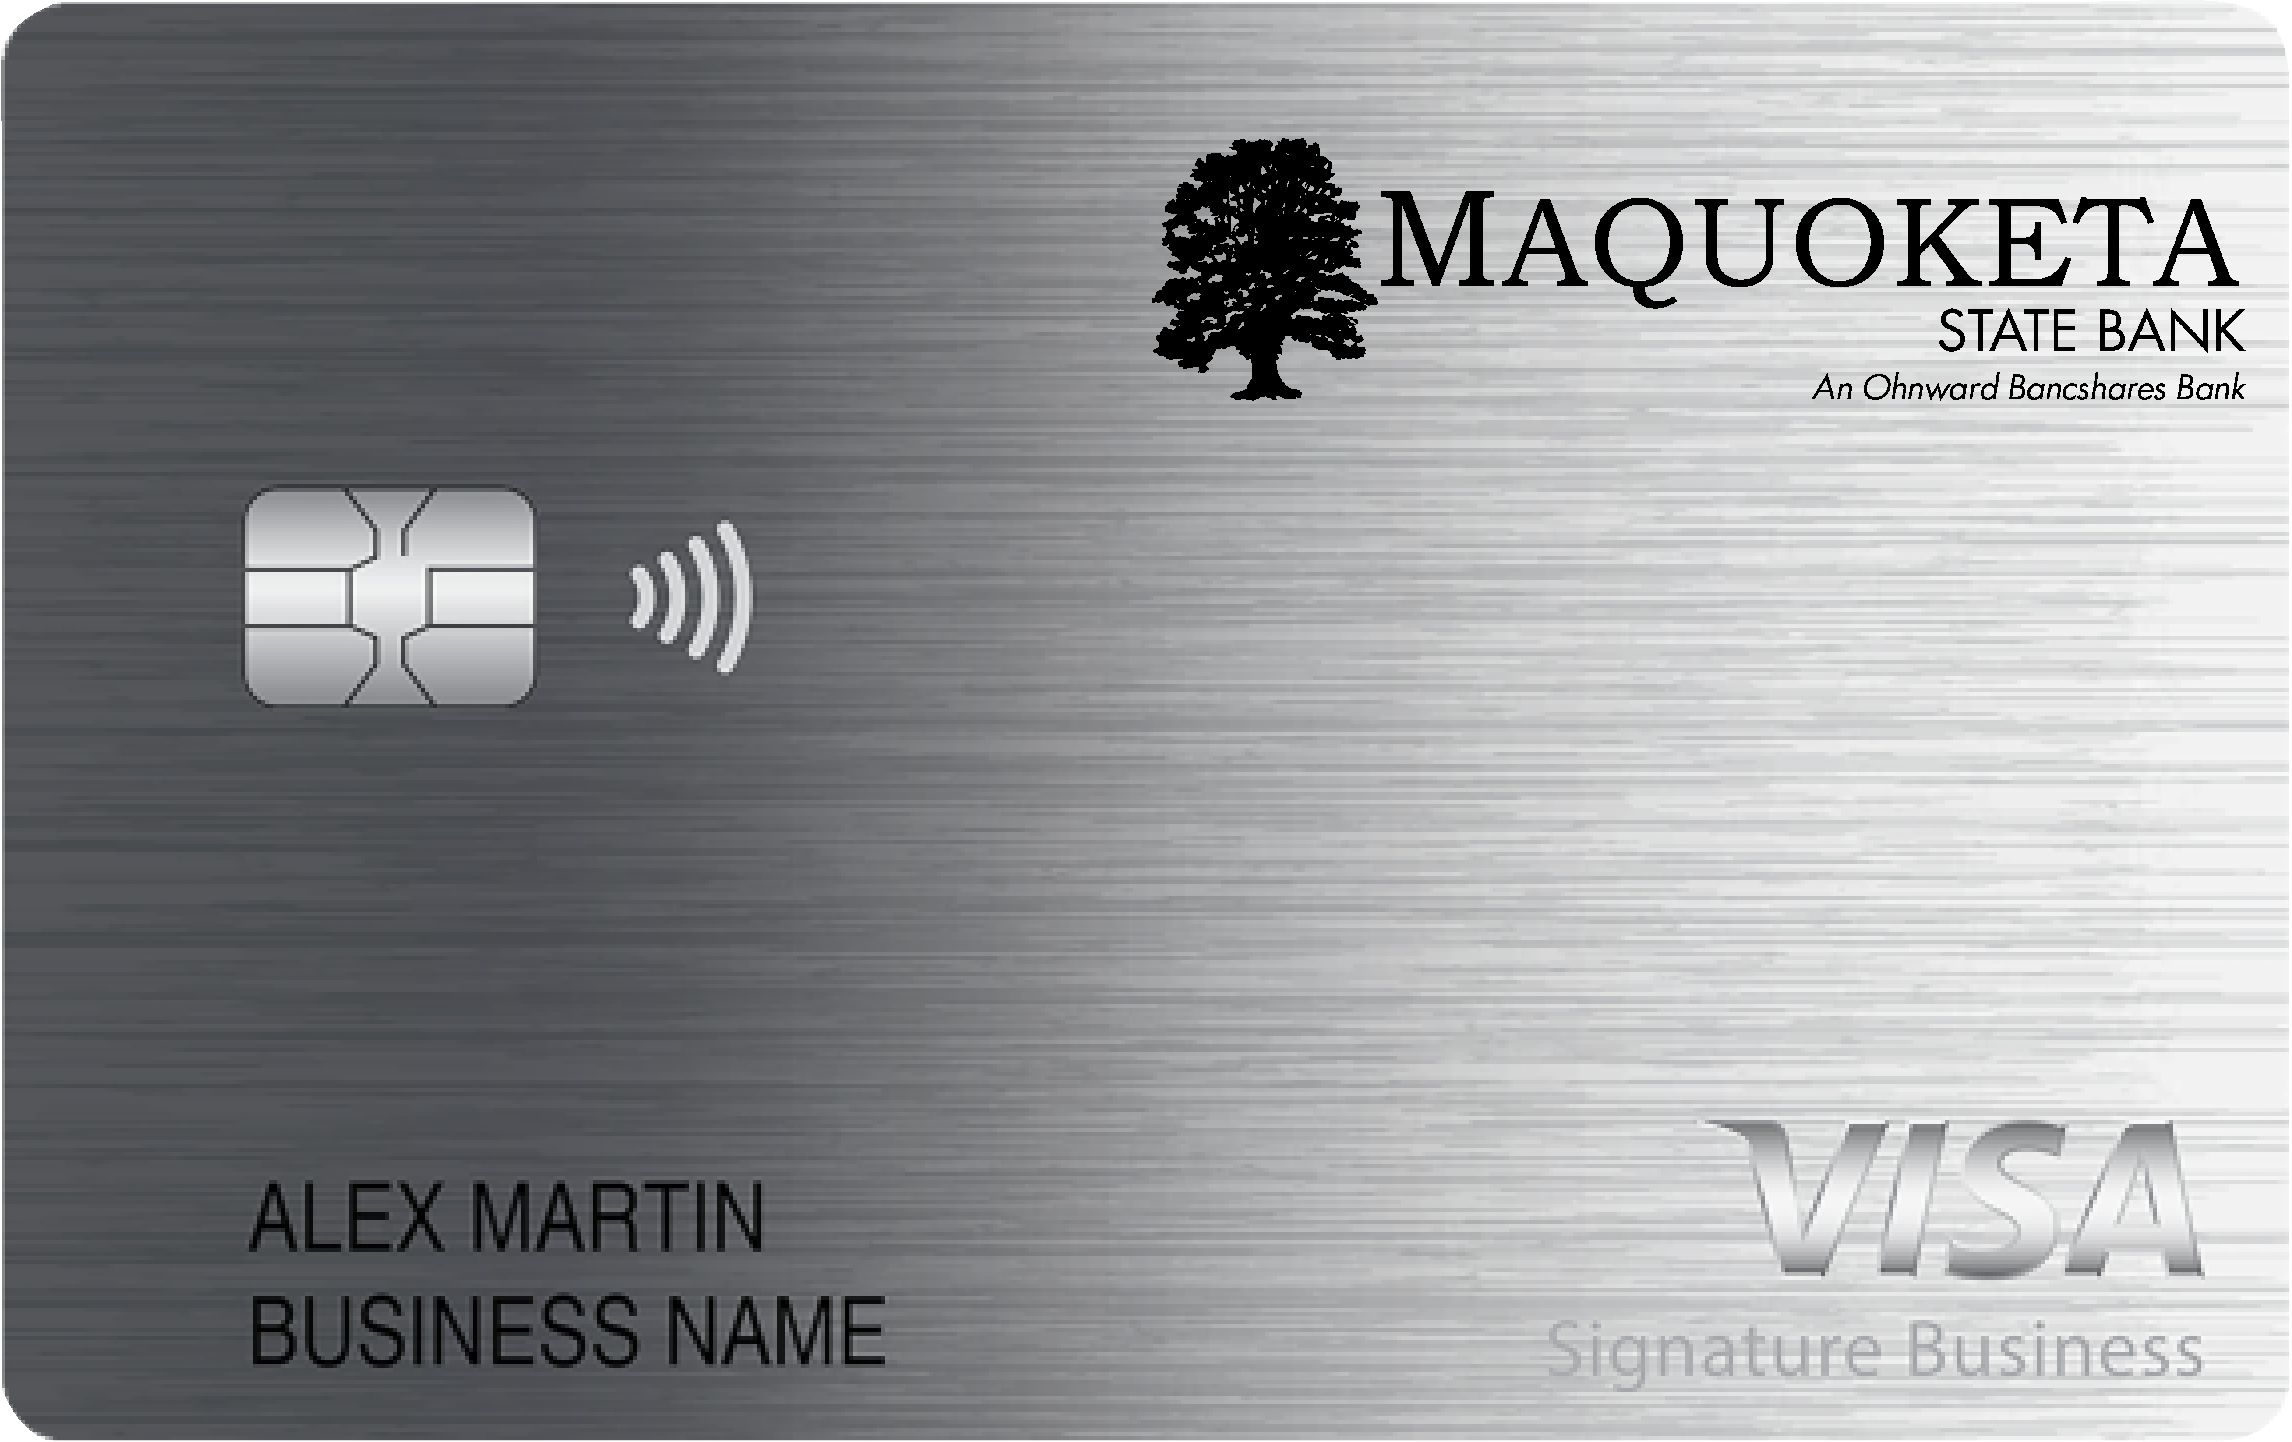 Maquoketa State Bank Smart Business Rewards Card